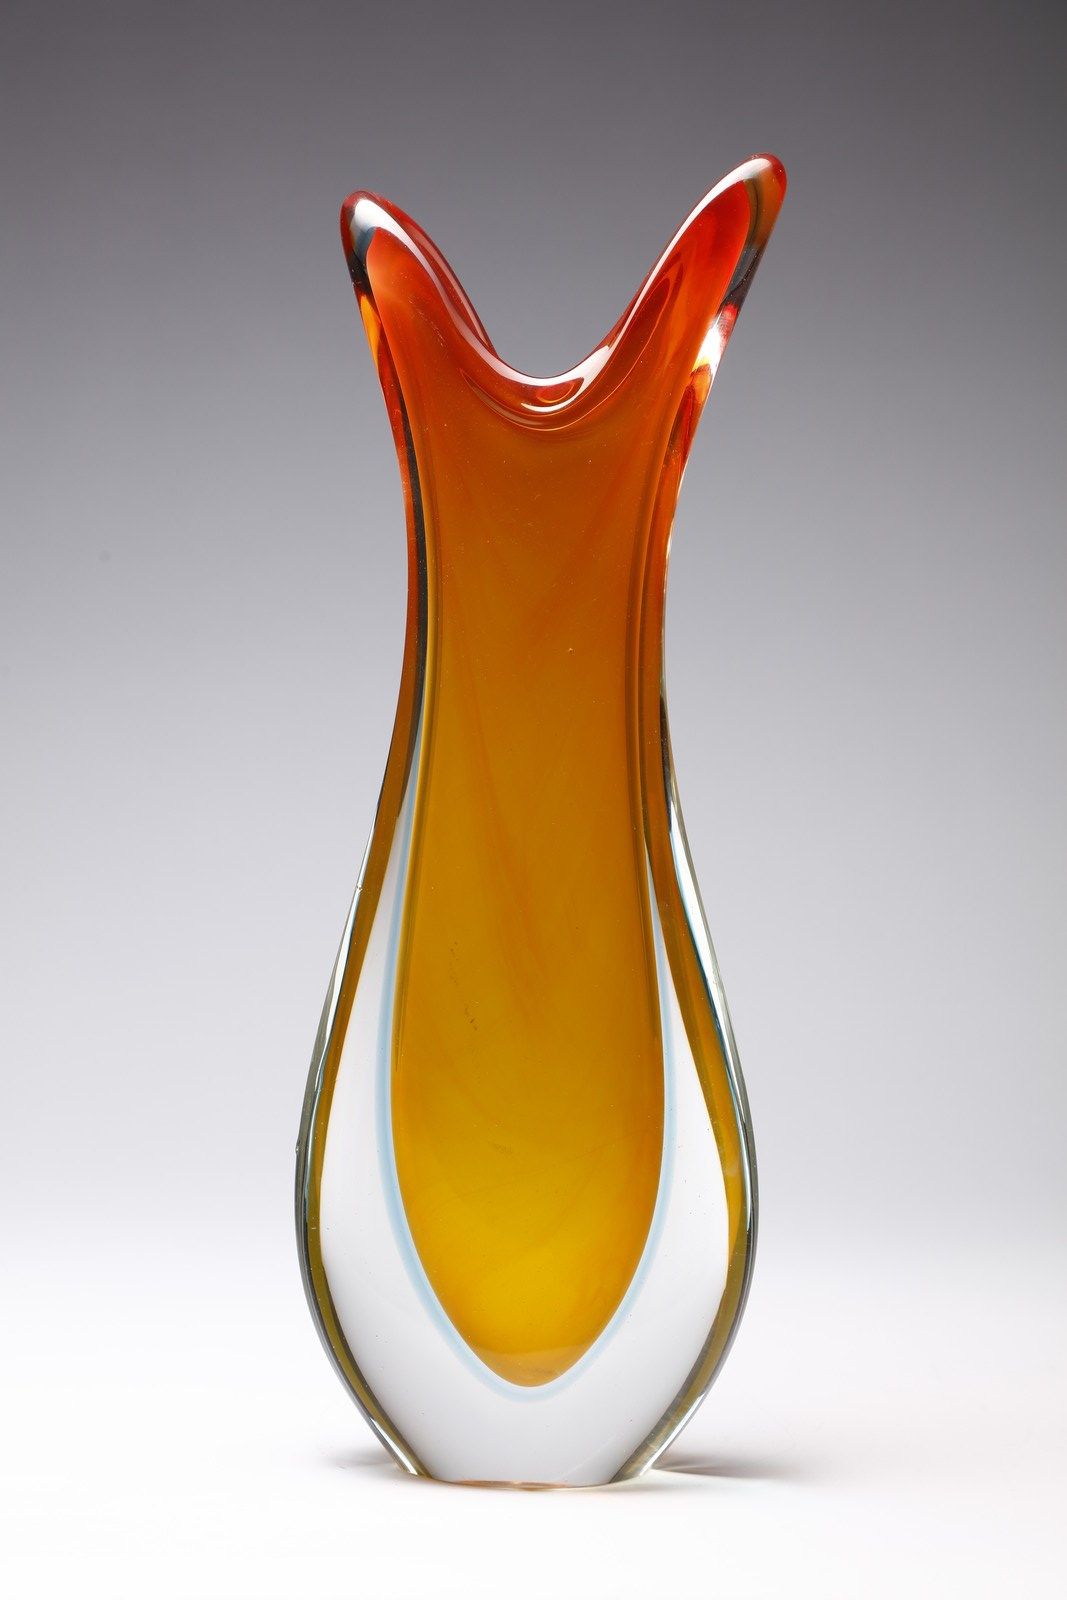 Manifattura Muranese 黄色、橙色和蓝色的沉浸式玻璃花瓶。穆拉诺玻璃。Cm 22.00 x 60.00 x 10.00。